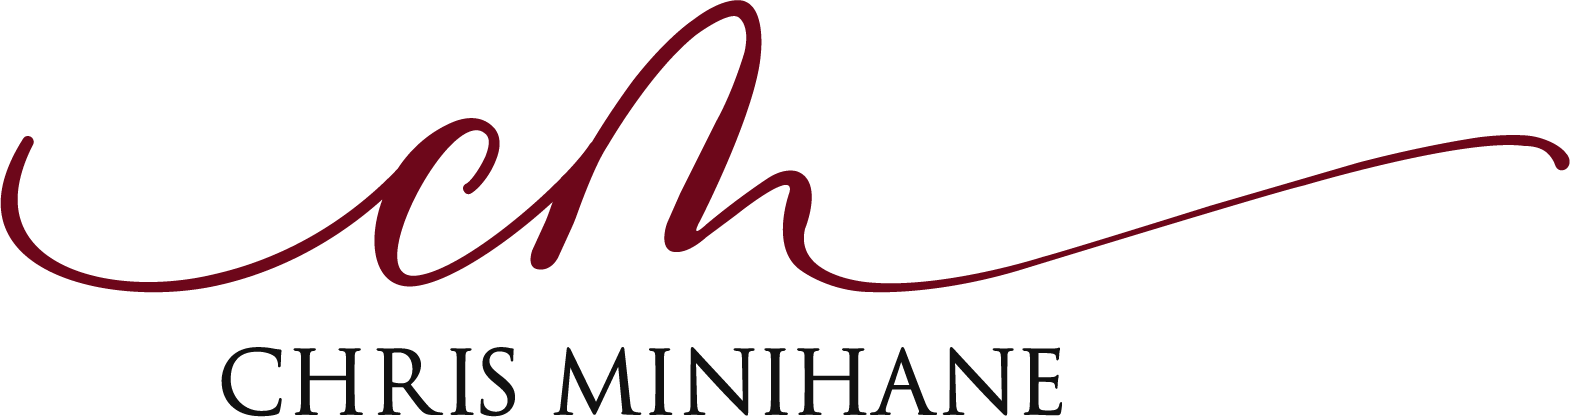 Chris Minihane Logo